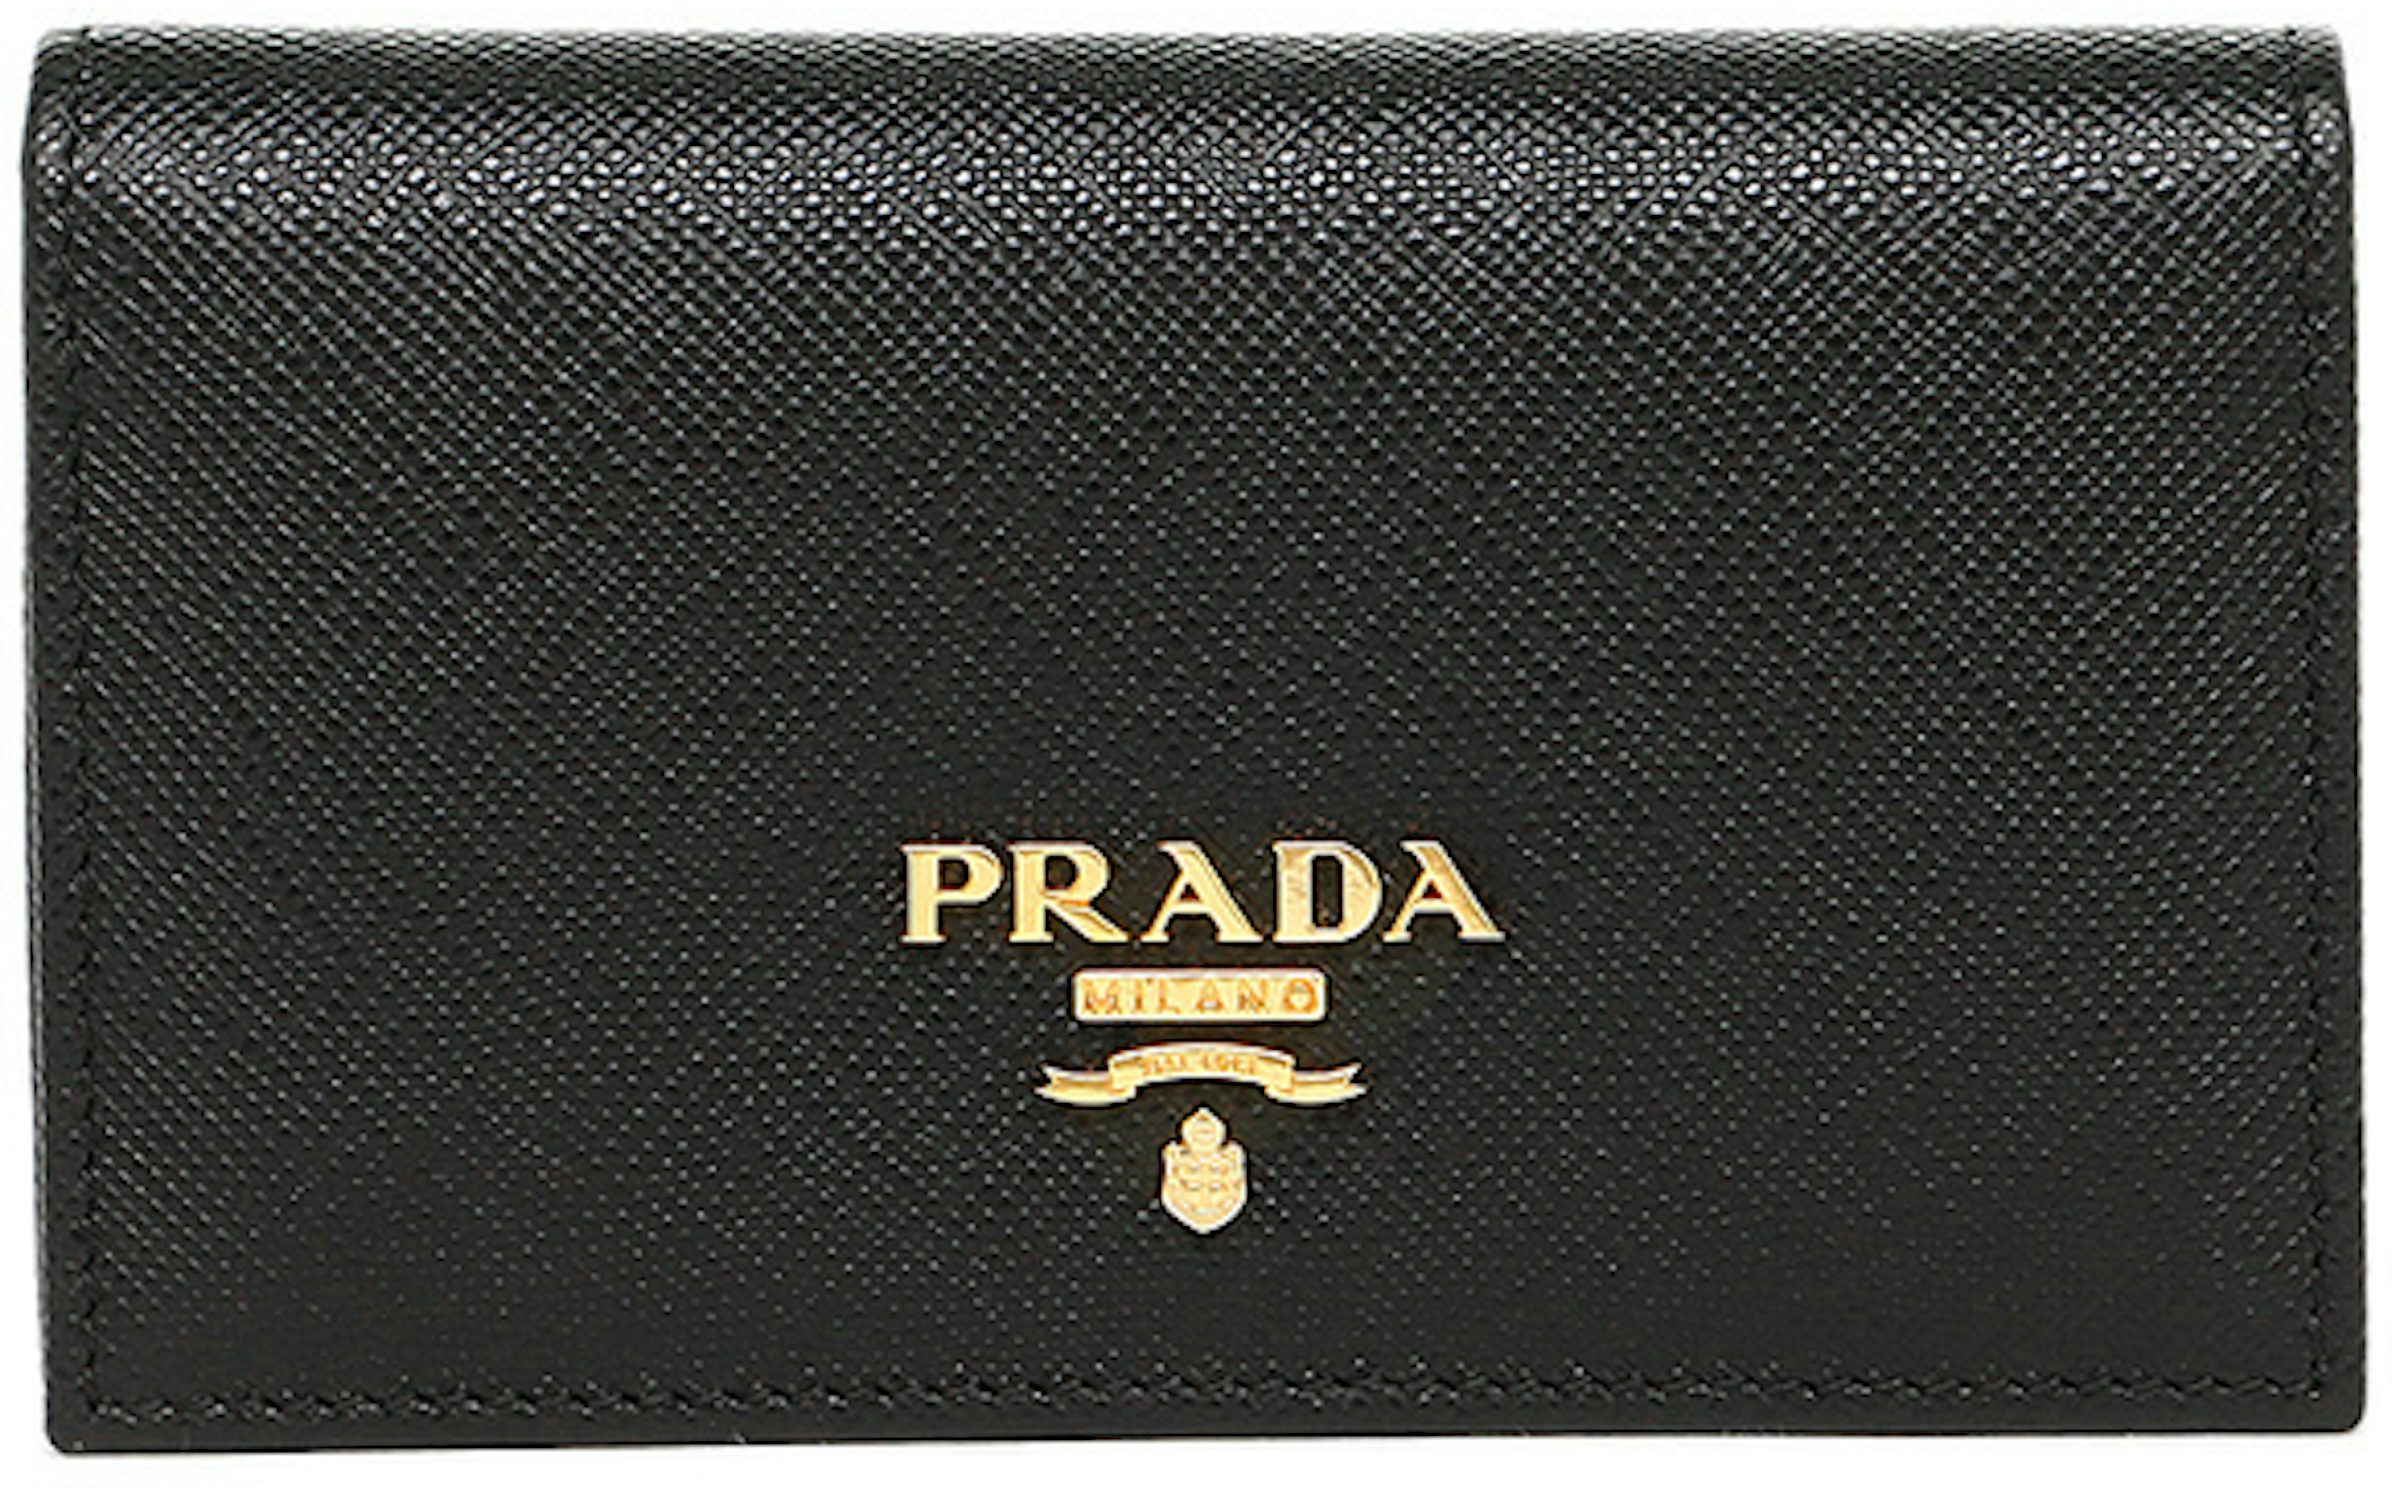 Prada Pink Saffiano Leather Envelope Wallet Prada